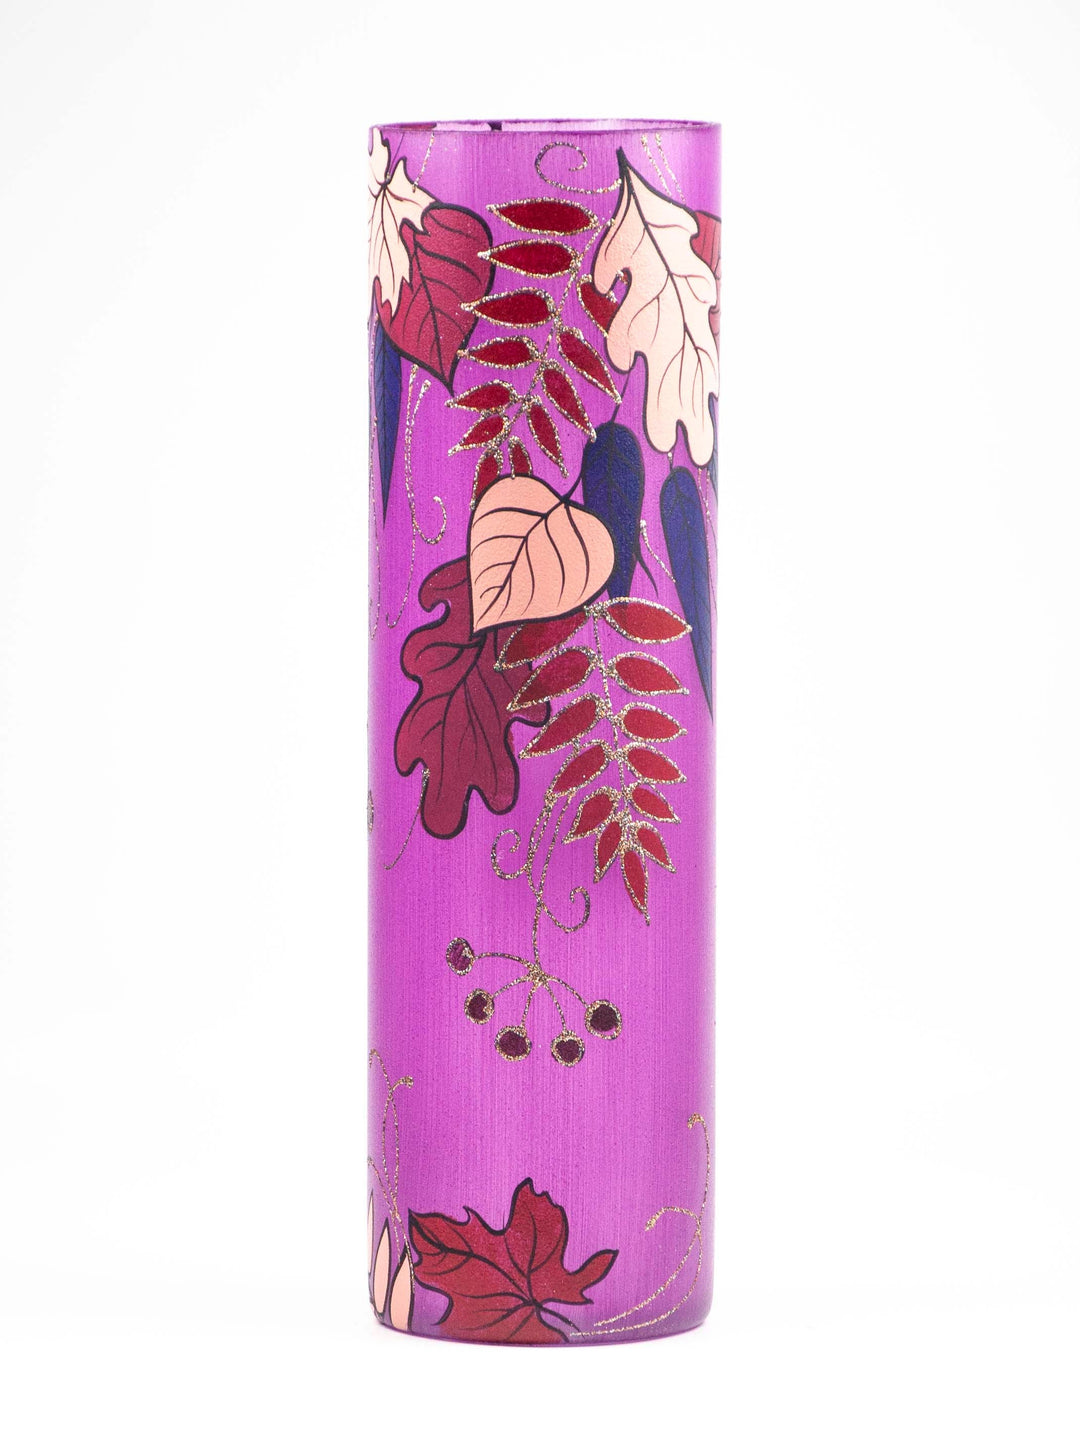 Bright autumn | Art decorated glass vase | Glass vase for flowers | Cylinder Vase | Interior Design | Home Decor | Large Floor Vase 16 inch-3